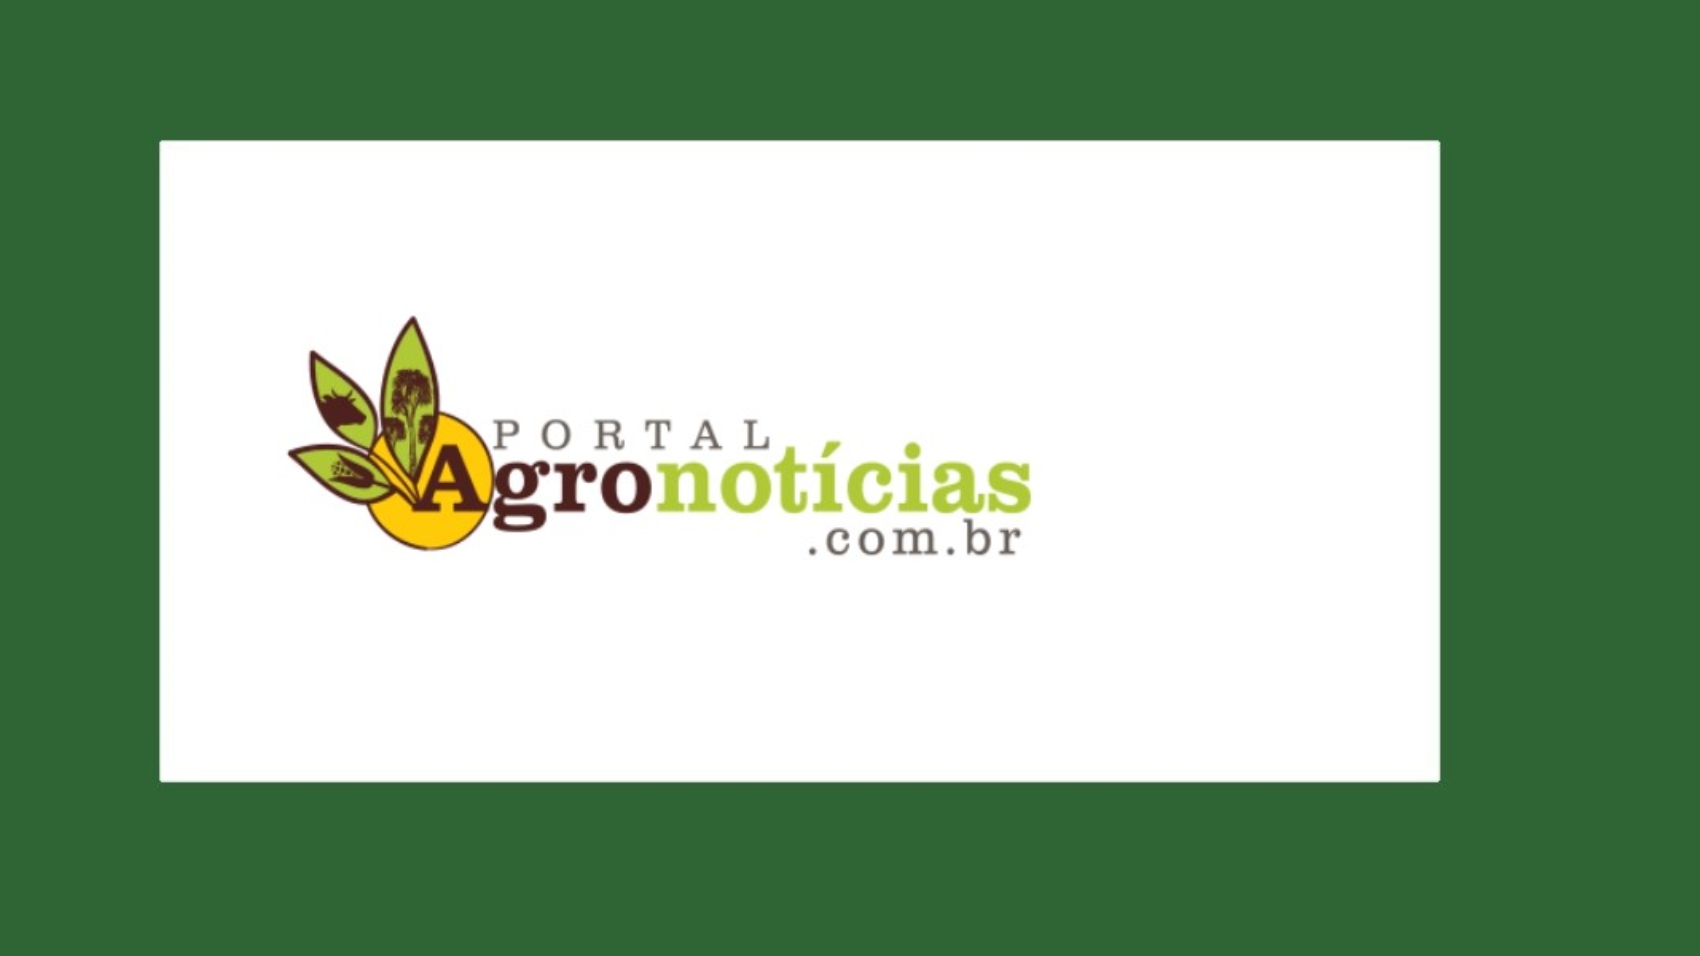 portal-agronoticias-mahogany-roraima-iplant-forest